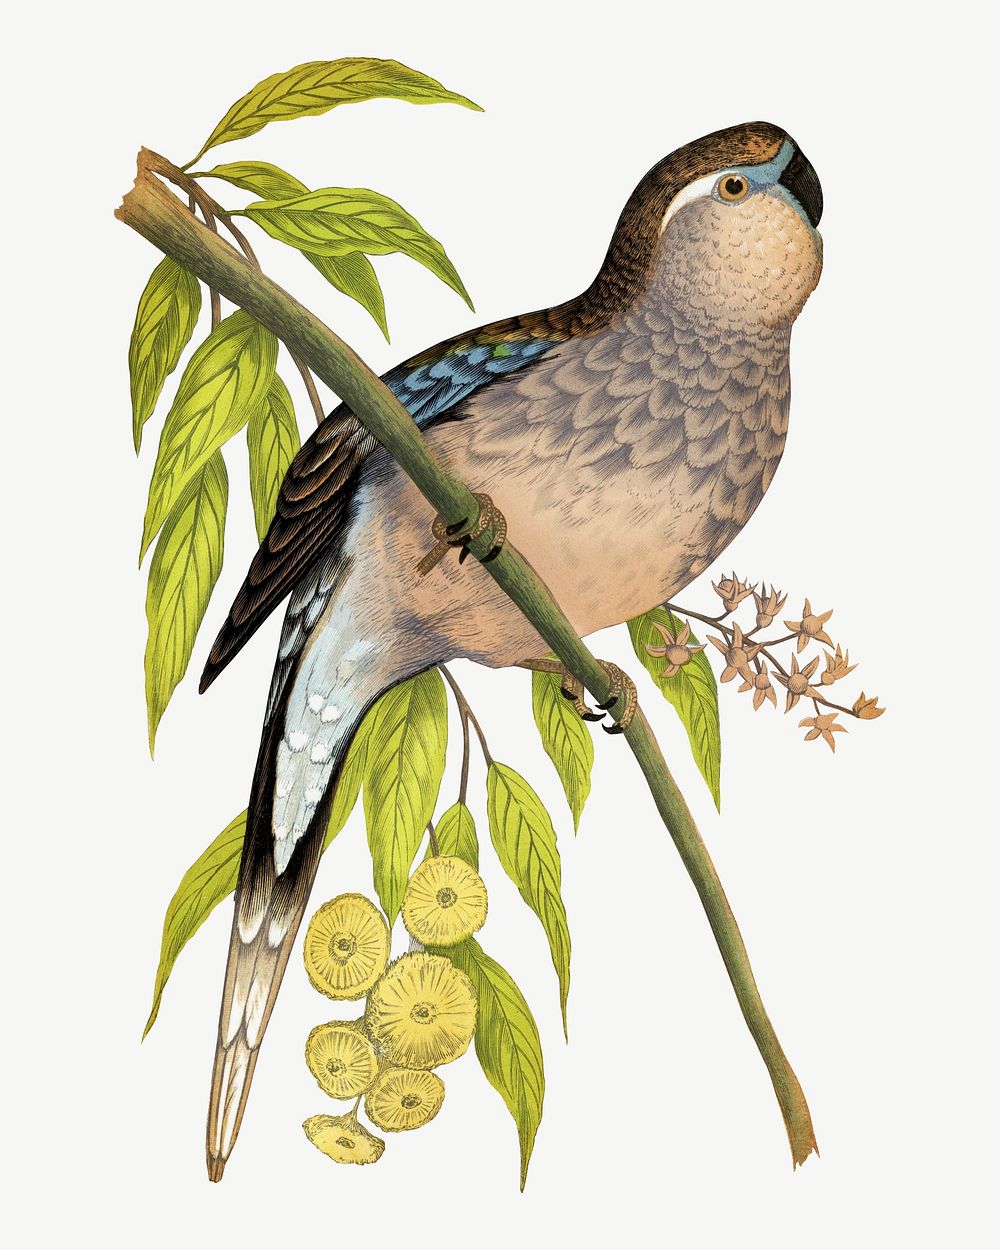 Bourke's parakeet, vintage bird illustration psd. Remixed by rawpixel.